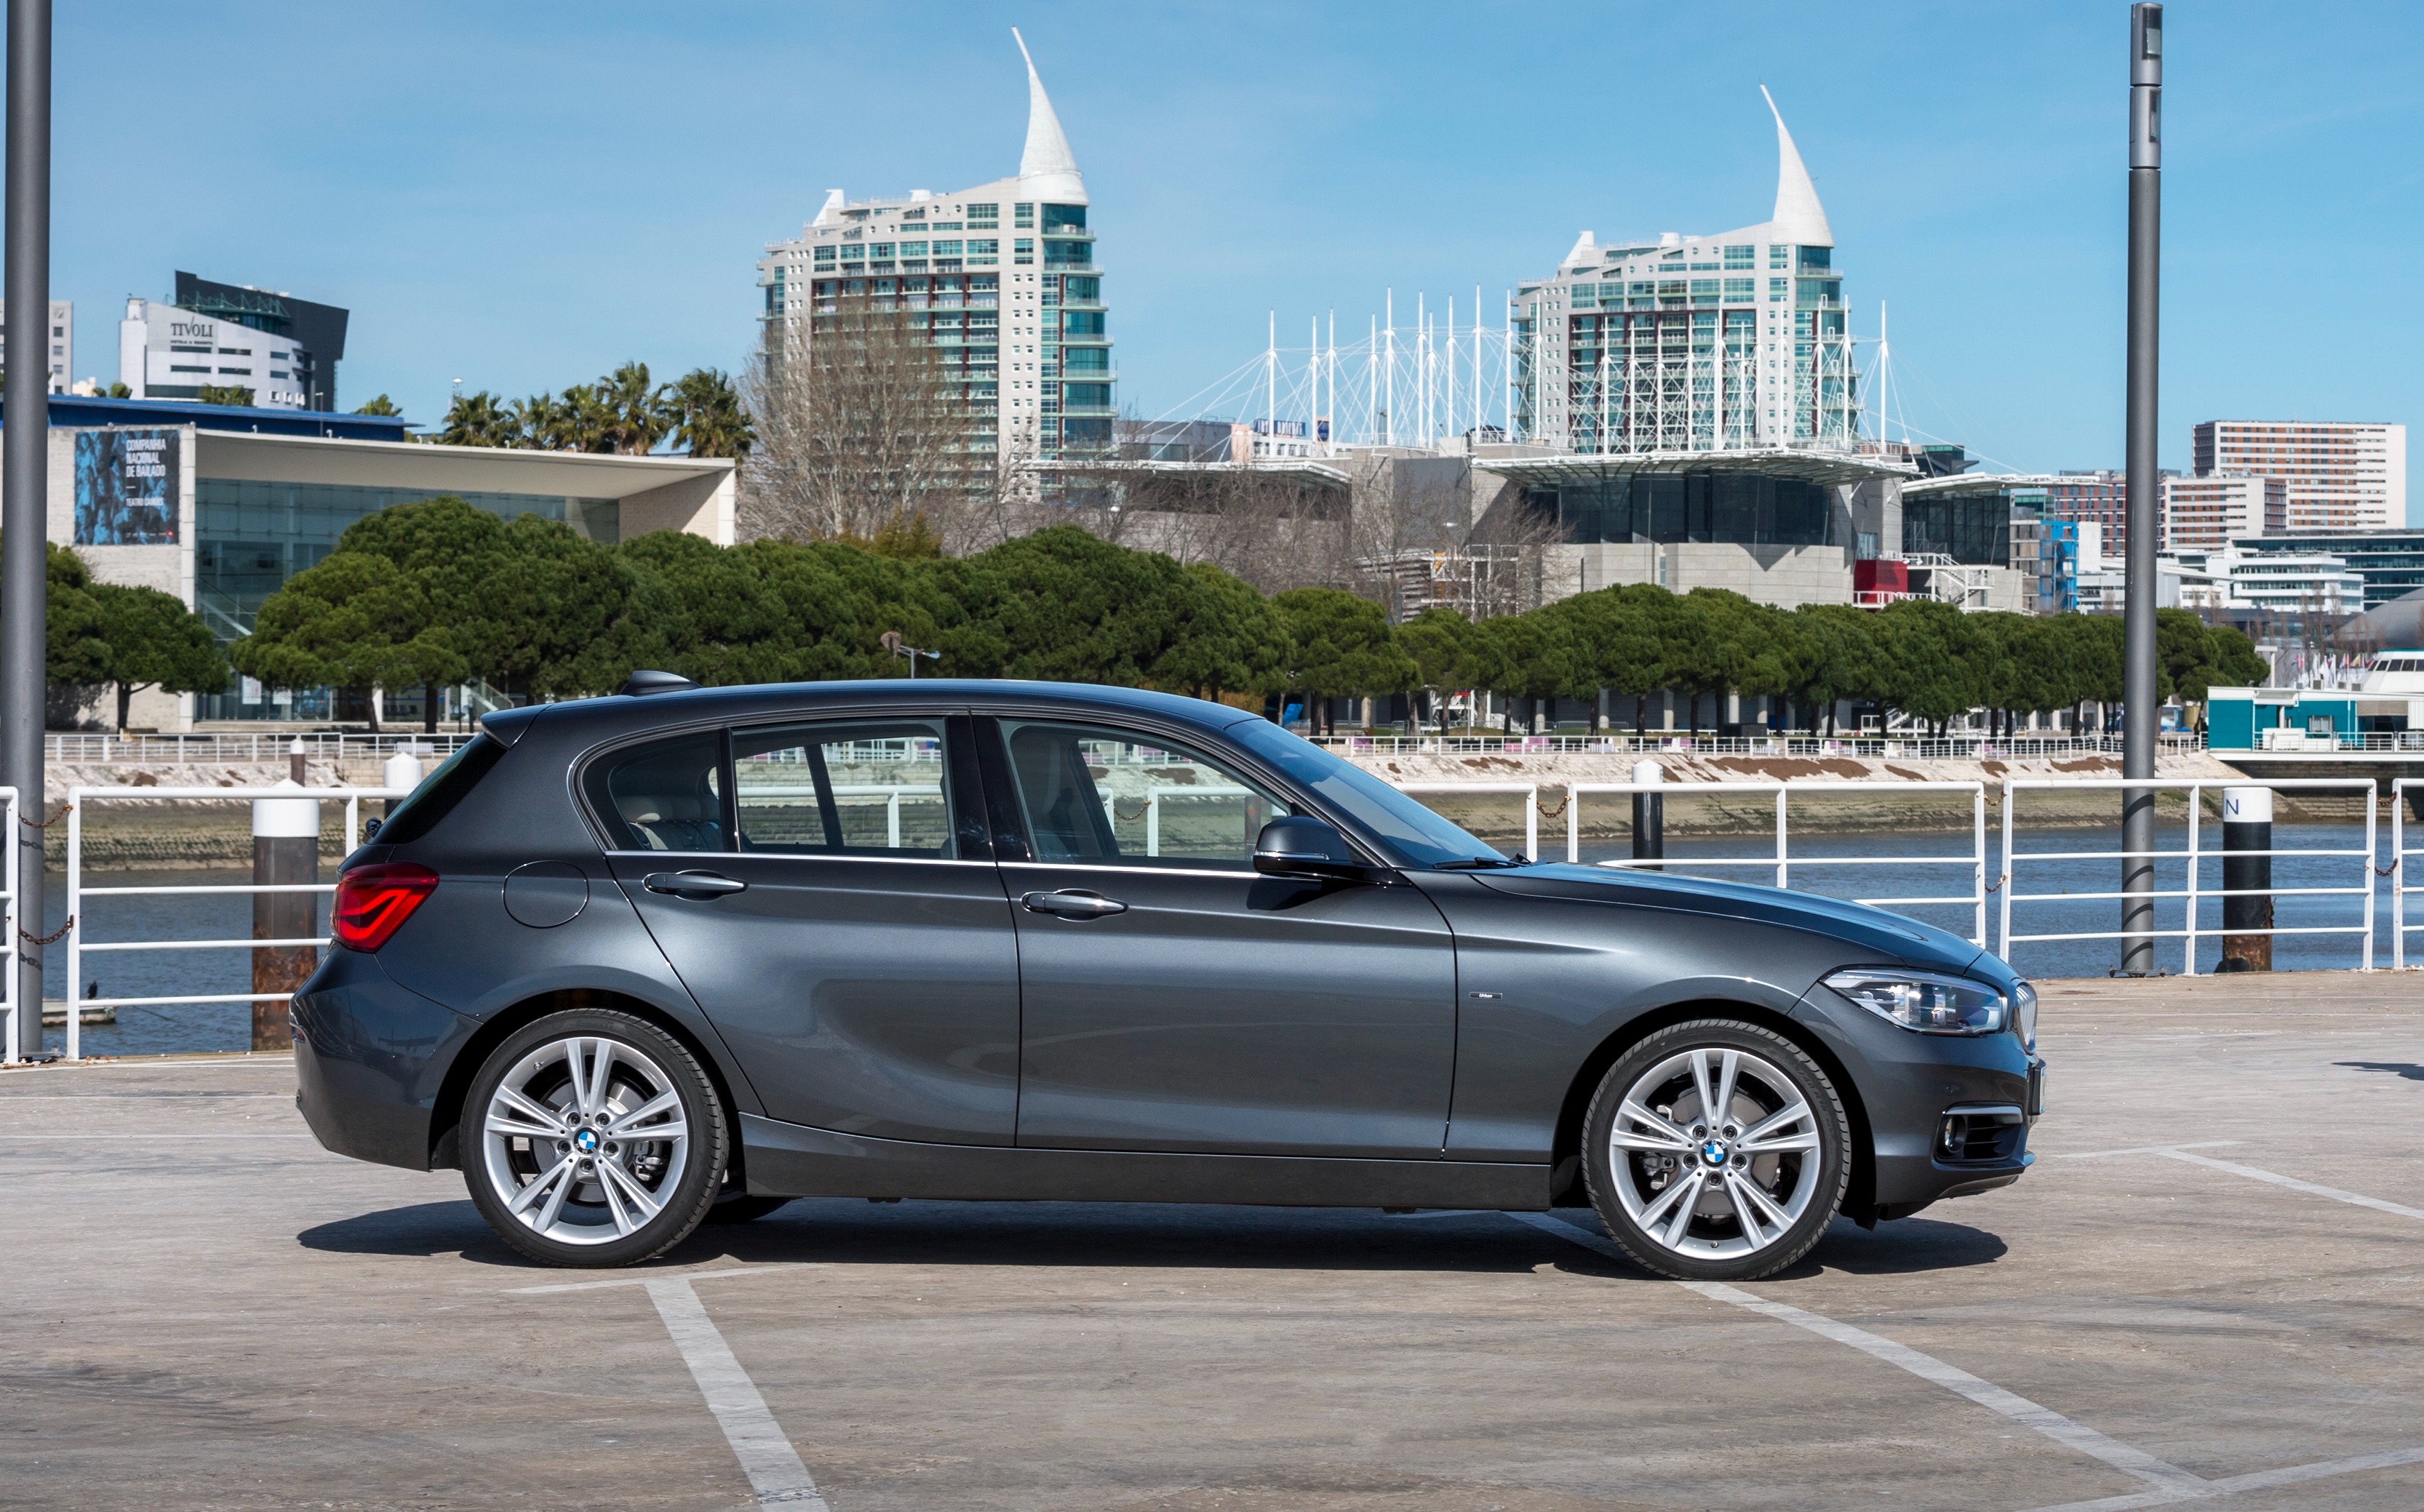 BMW 1er: Kompaktklasse jetzt mit Frontantrieb